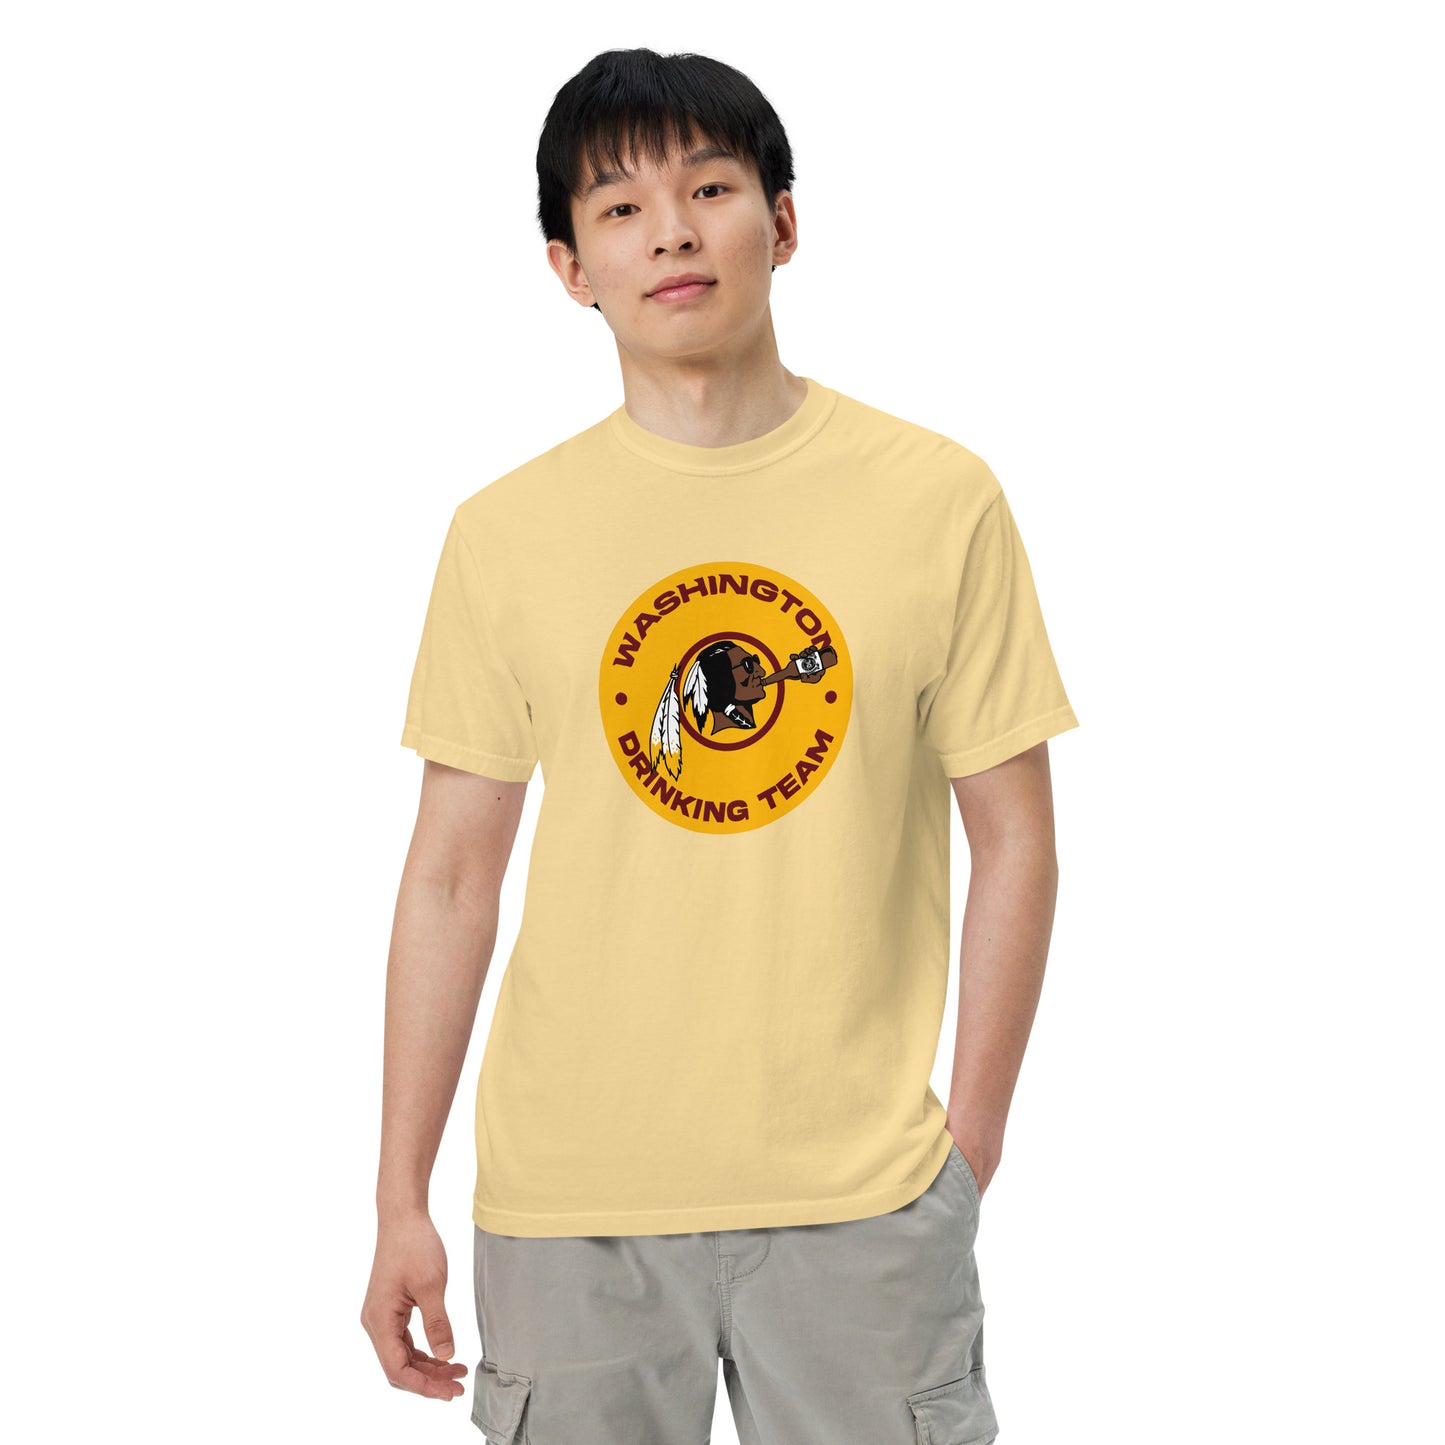 Washington Light Front T-Shirt